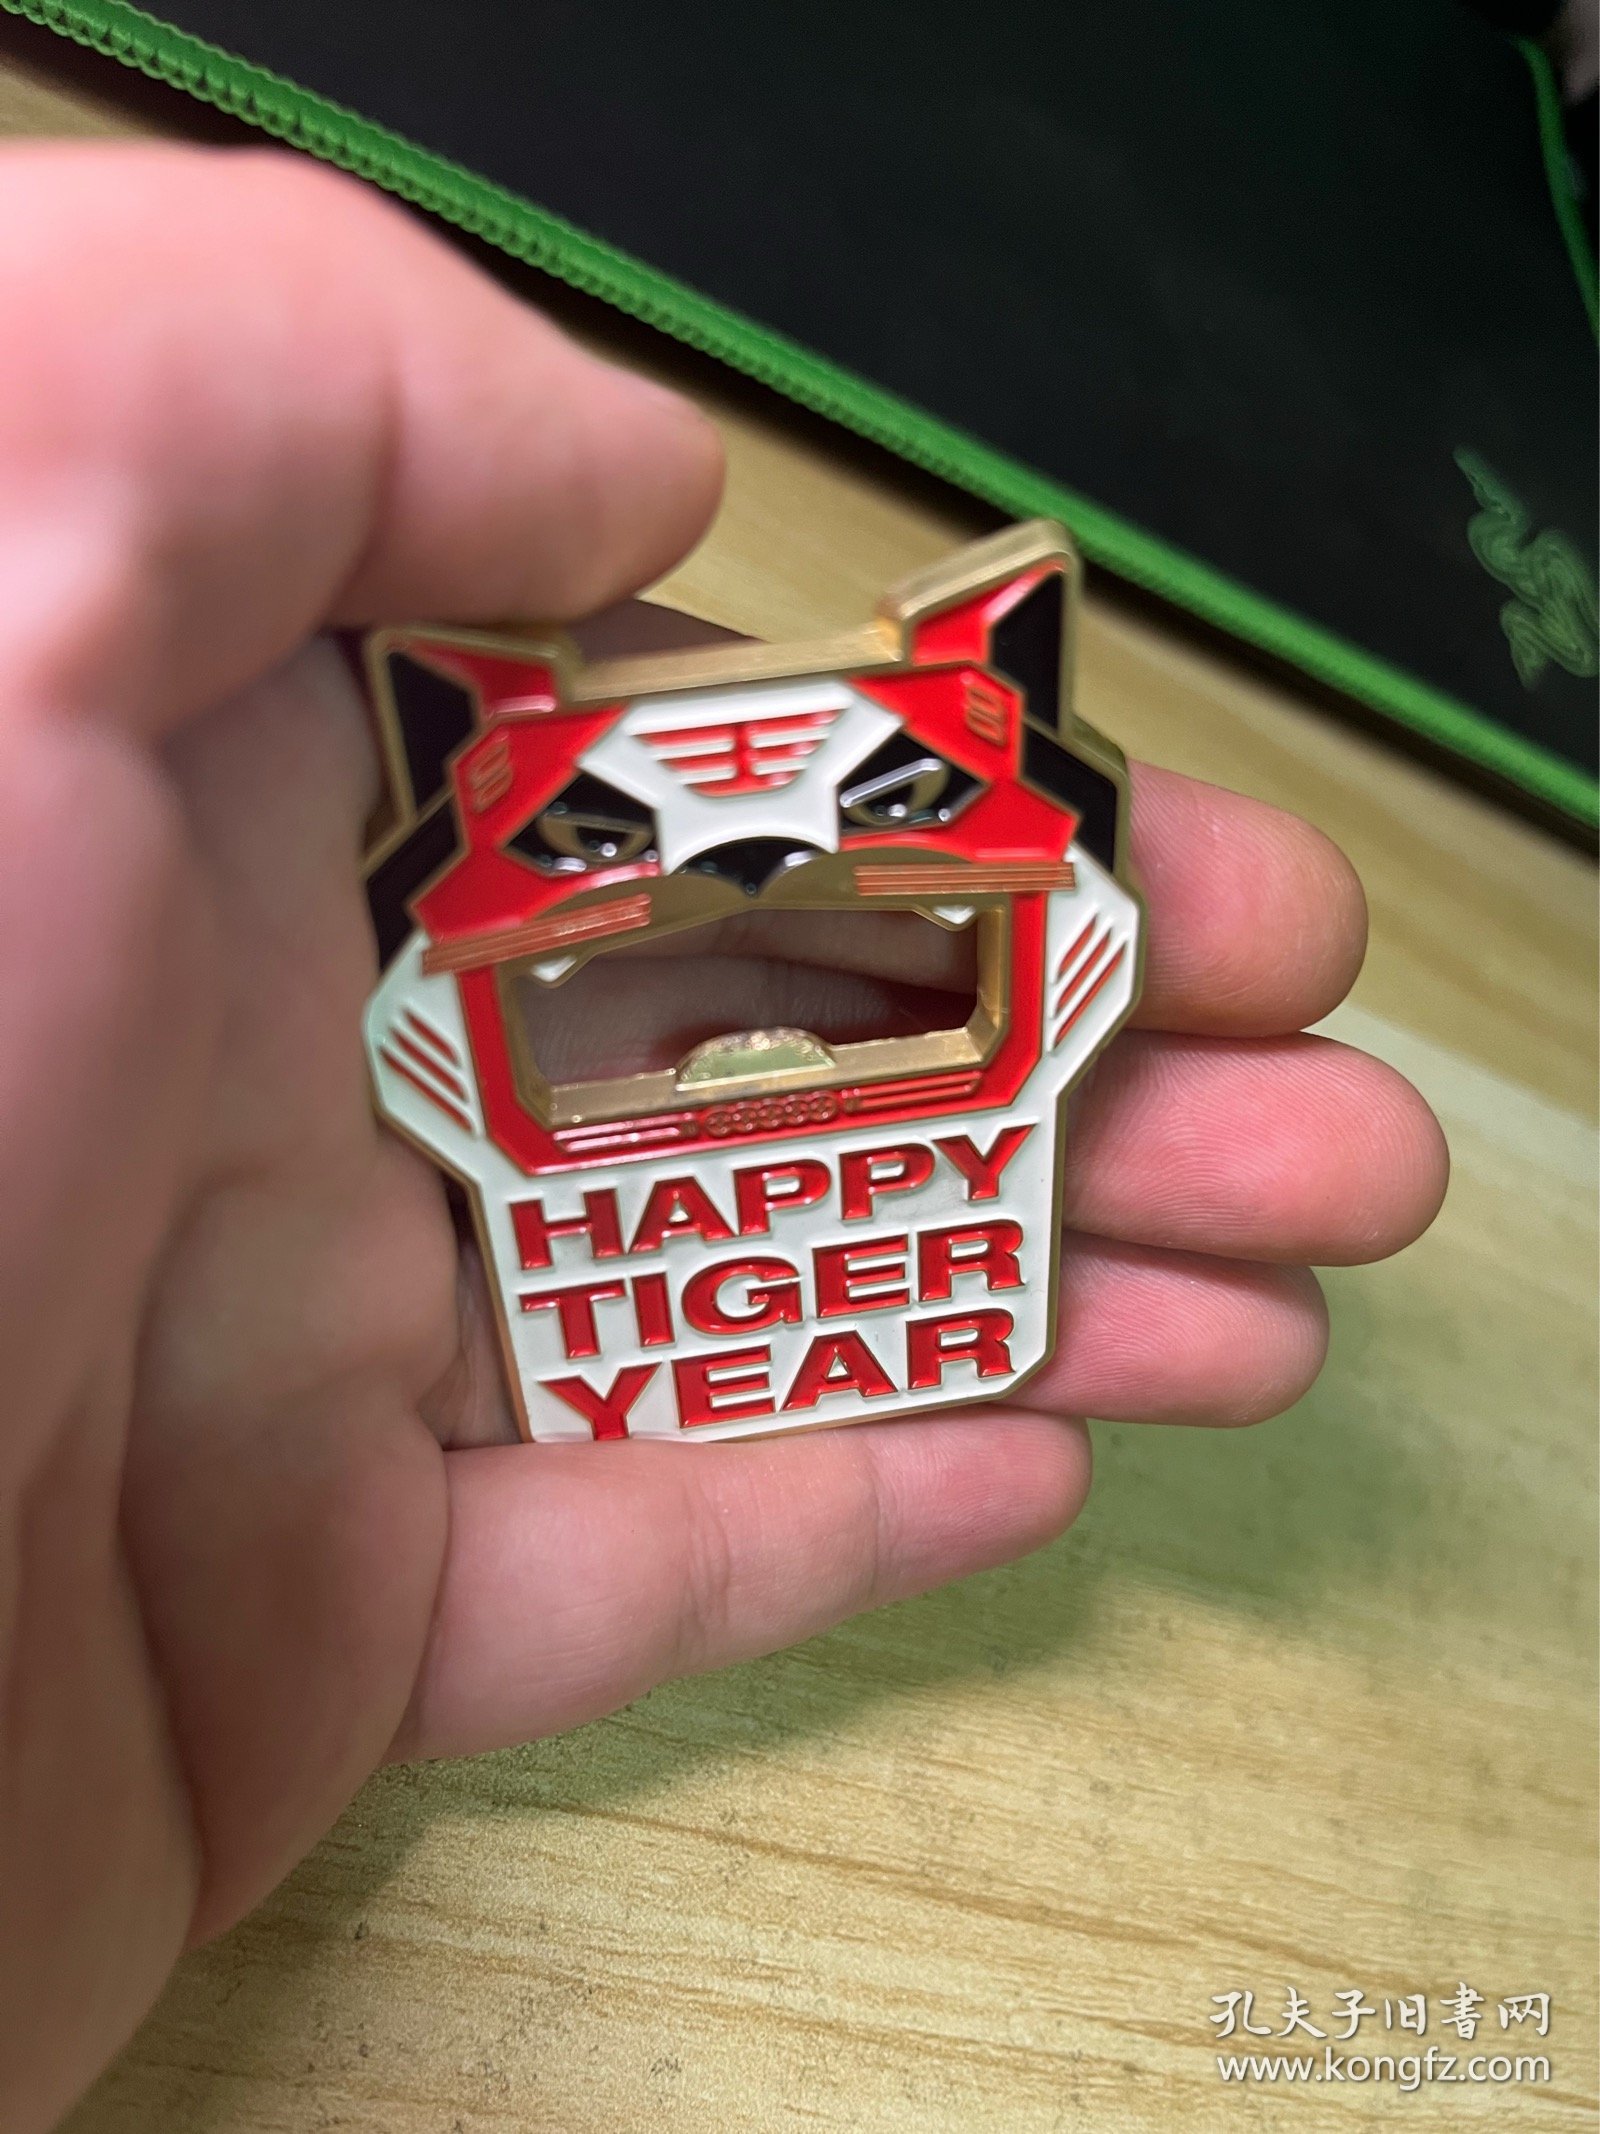 Mi小米虎年限定礼品 开瓶器 起子 冰箱贴 Happy Tiger Year 开瓶器起子处有使用痕迹（介意慎拍）包邮